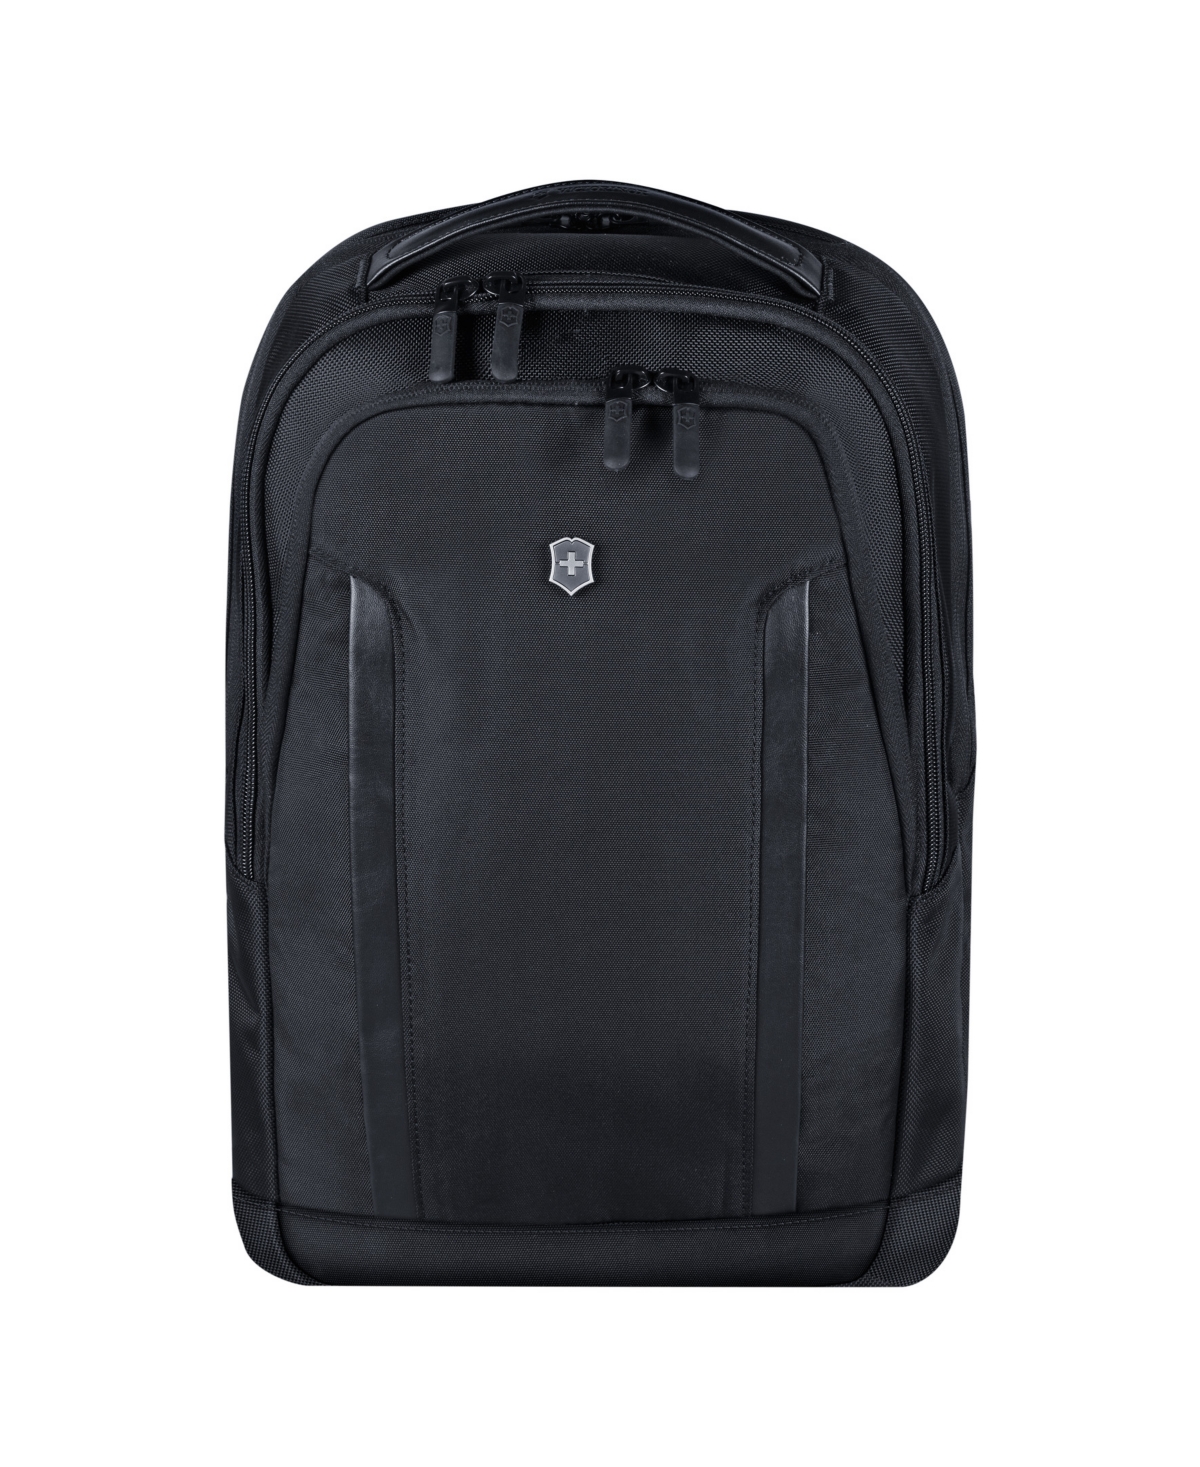 Altmont Professional Compact Laptop Backpack - Black